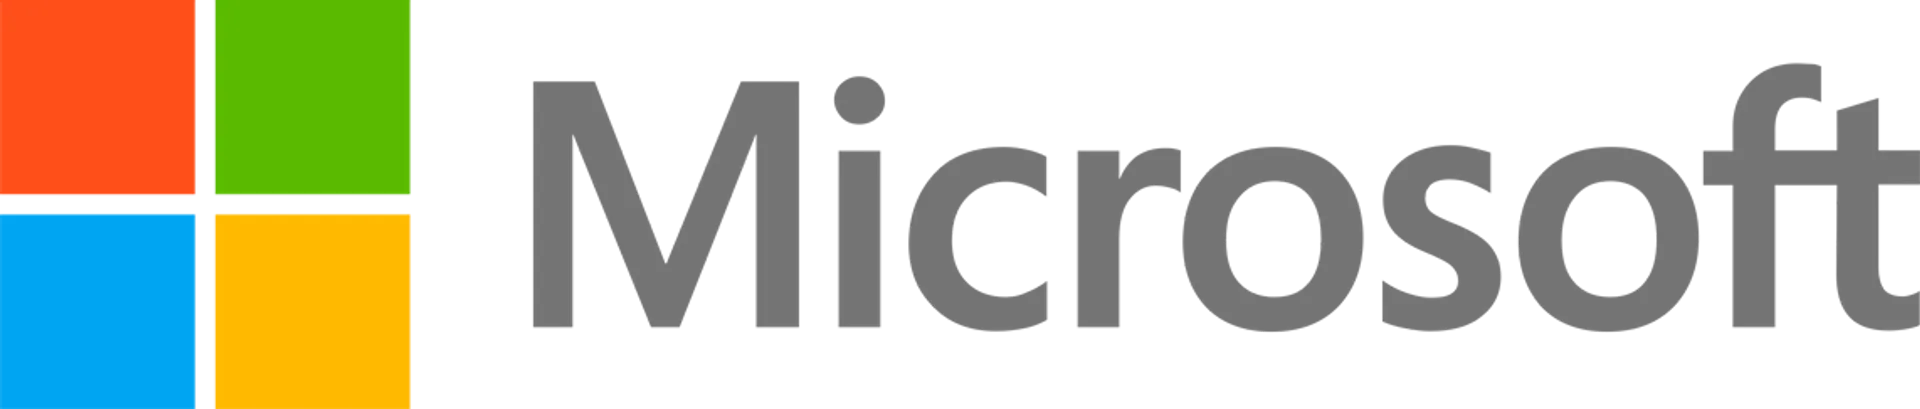 MICROSOFT logo